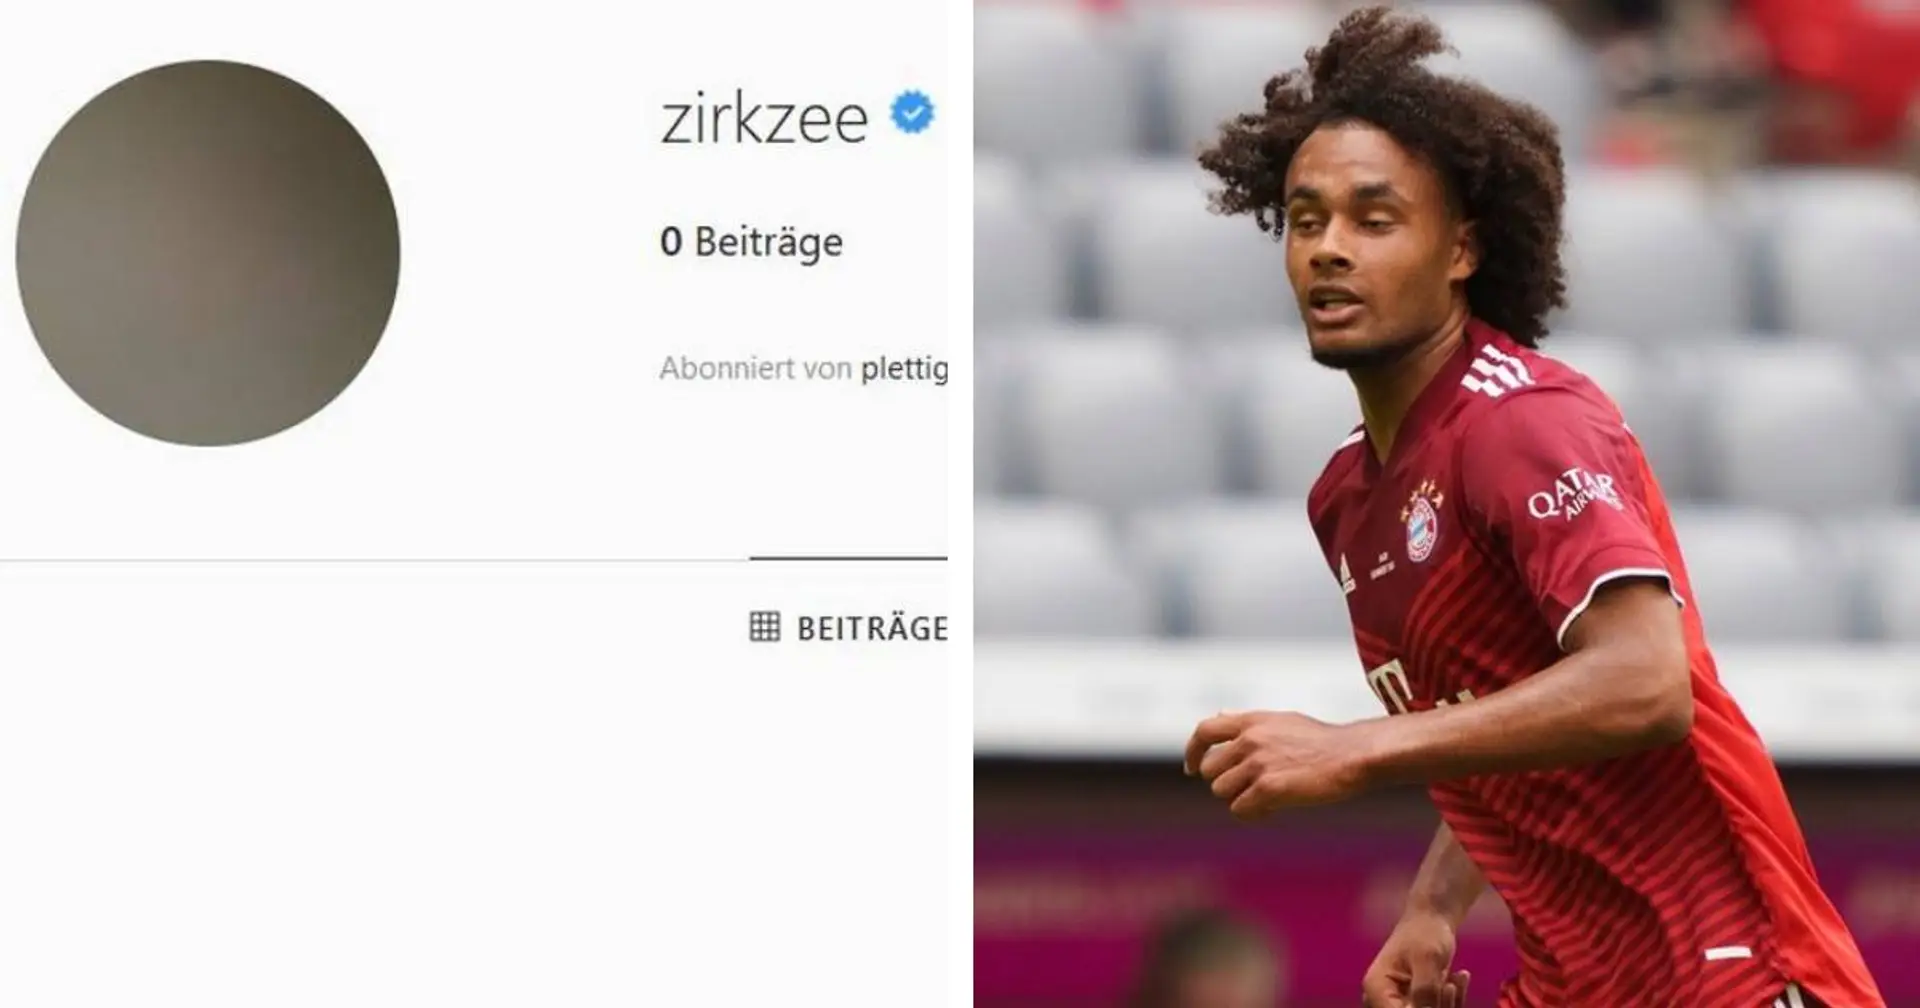 Joshua Zirkzee leert sein Instagram-Account wegen vieler Hass-Kommentare nach Ajax-Spiel